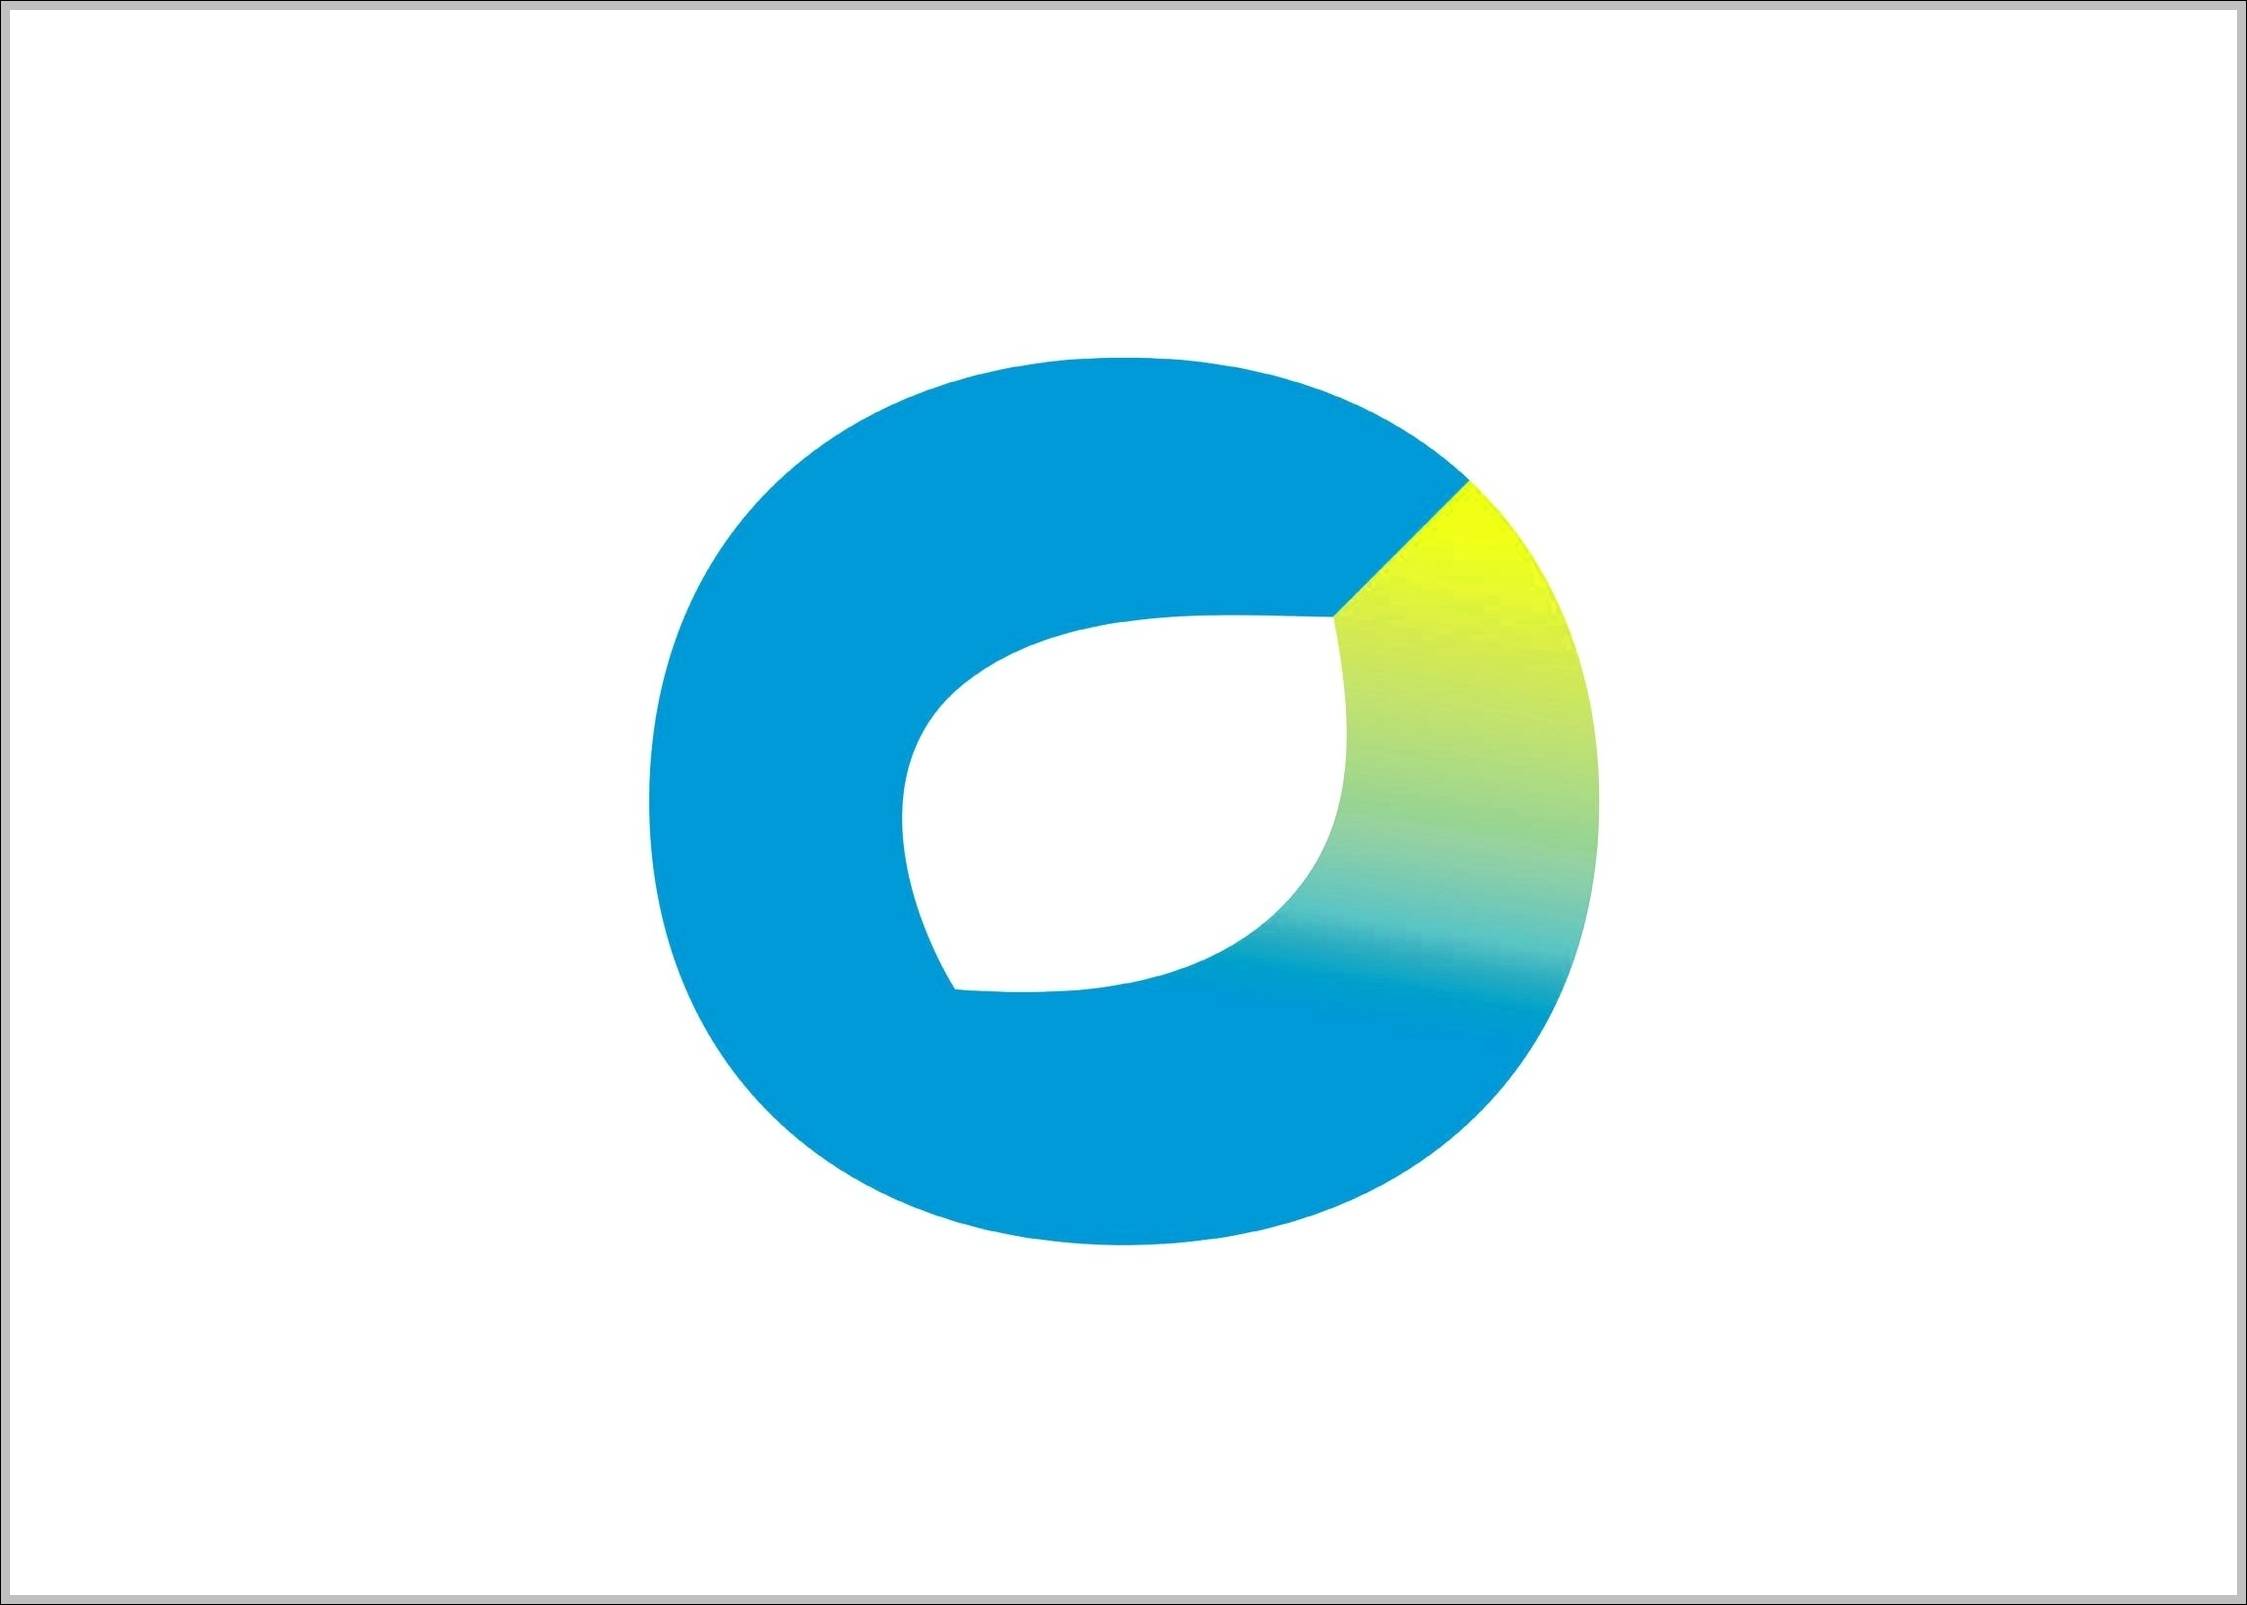 Chung Jung One logo